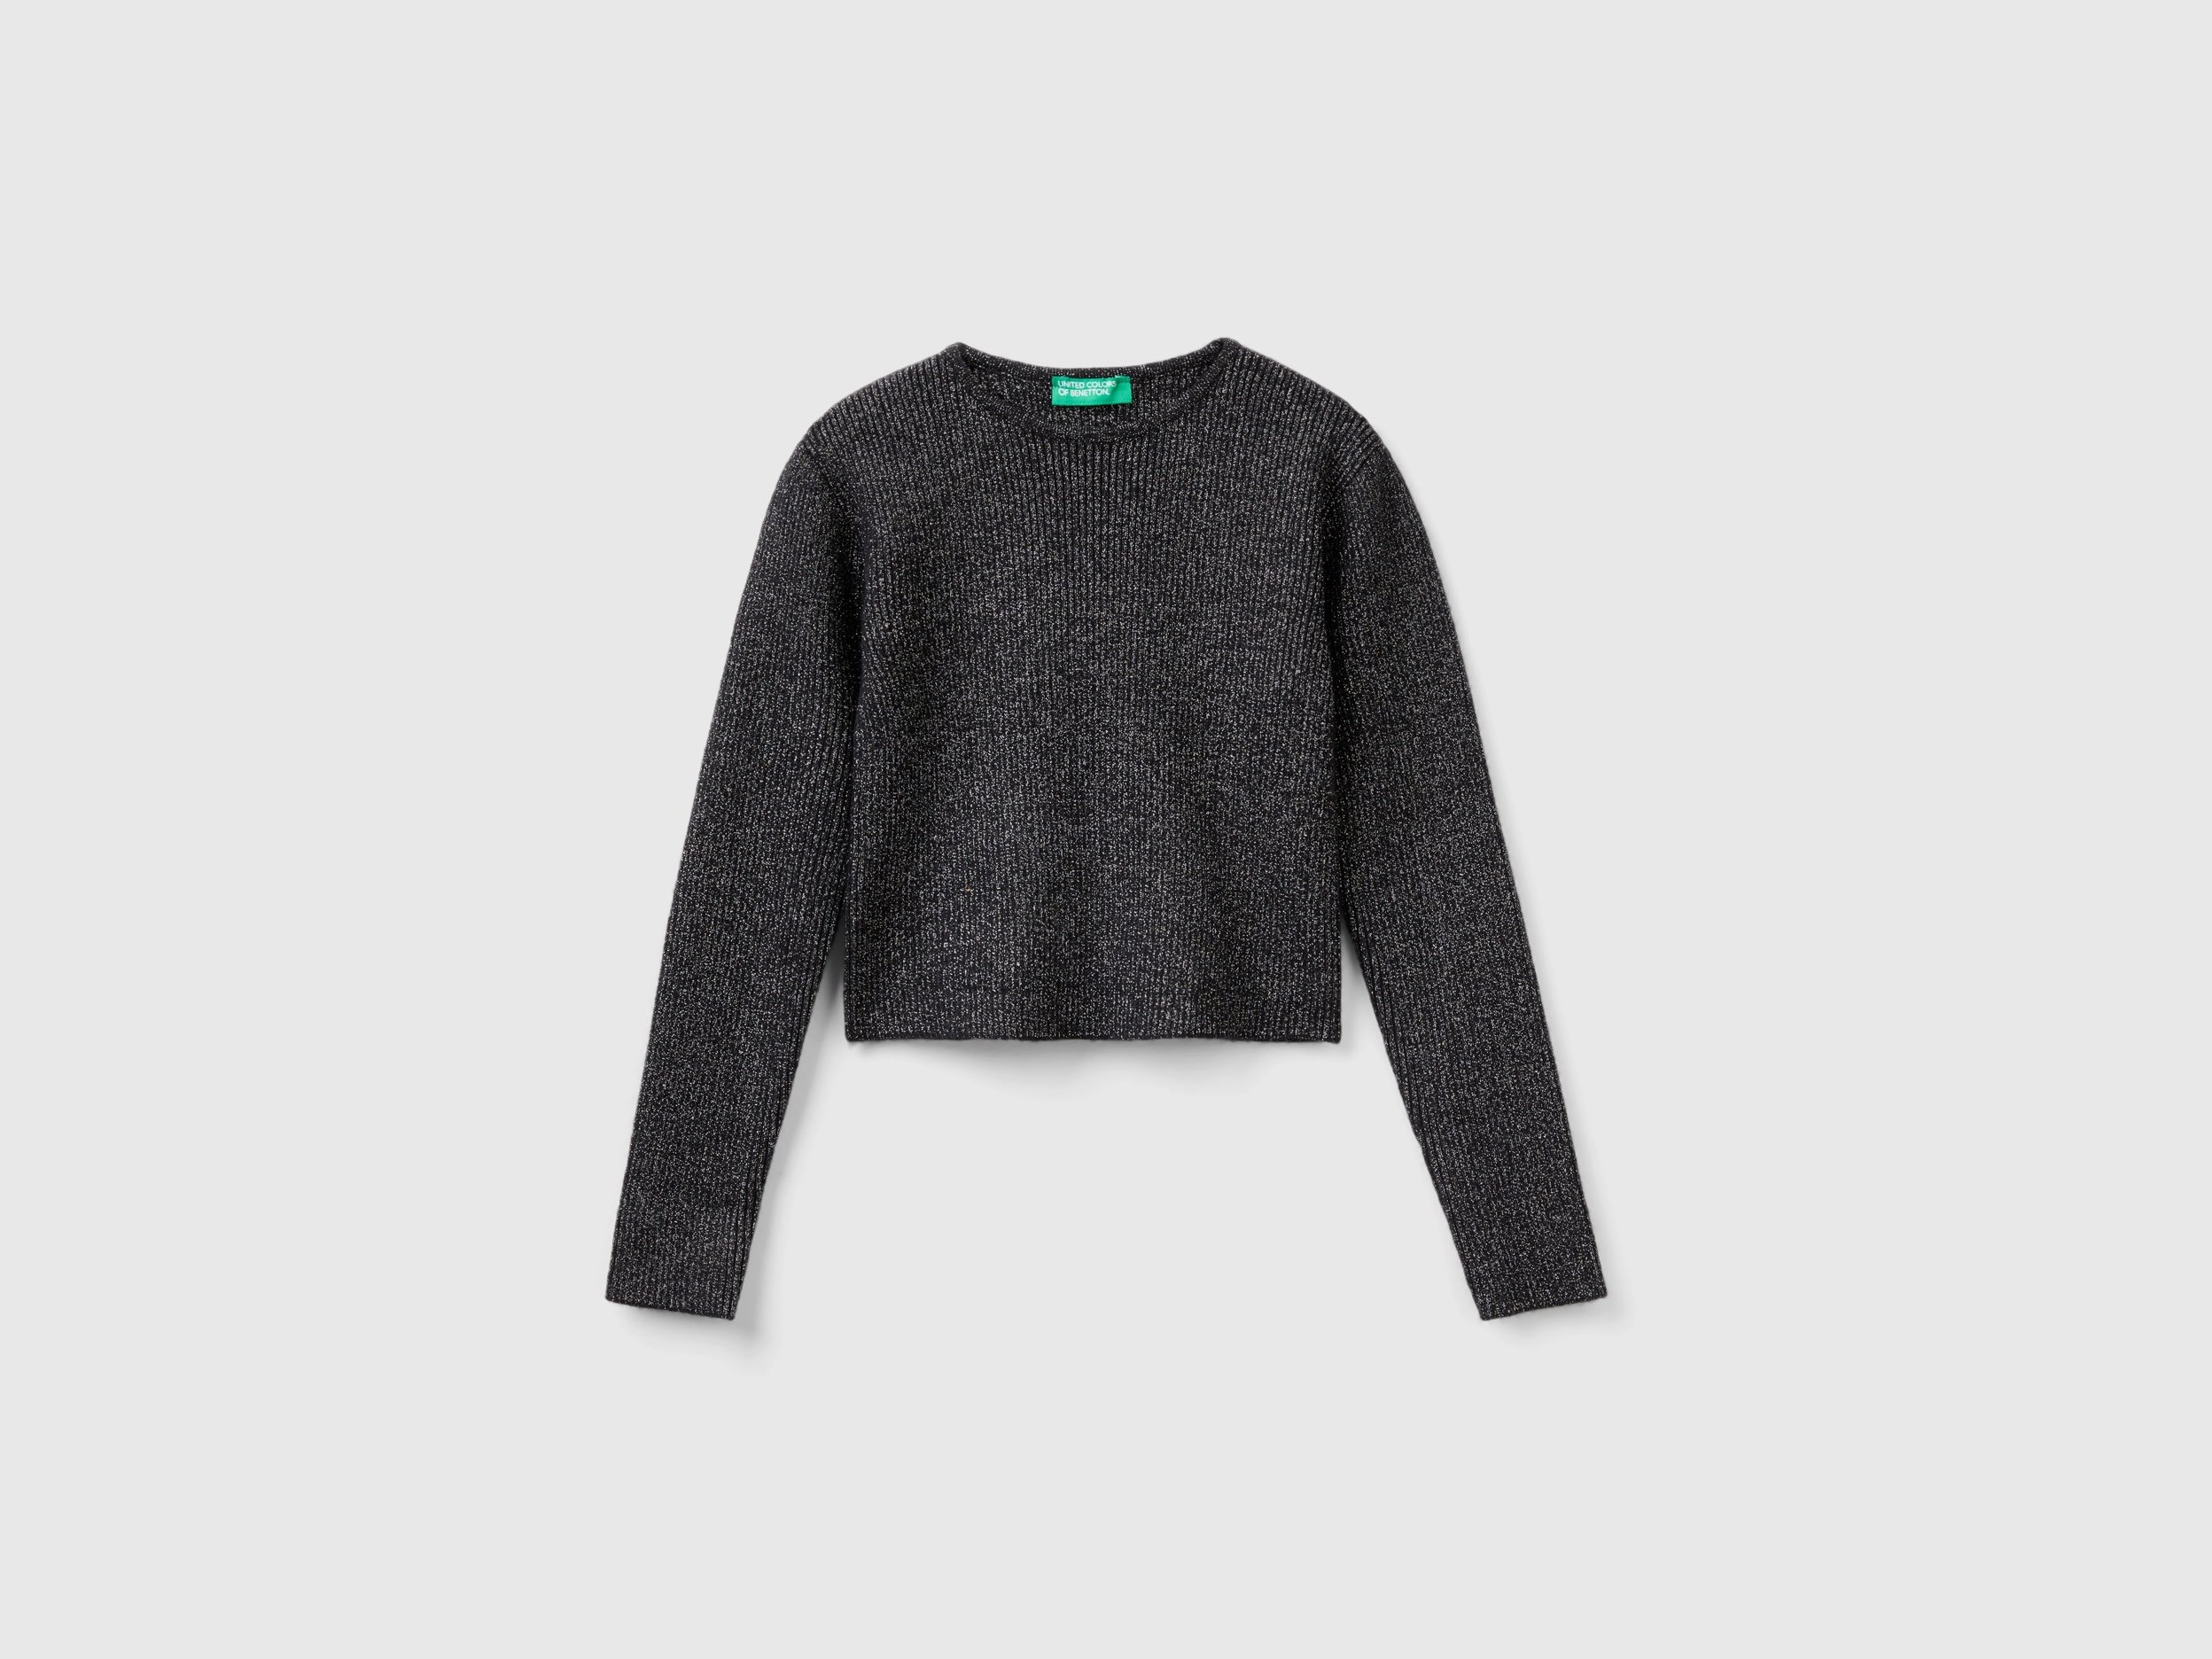 Benetton, Sweater With Lurex, size 3XL, Black, Kids